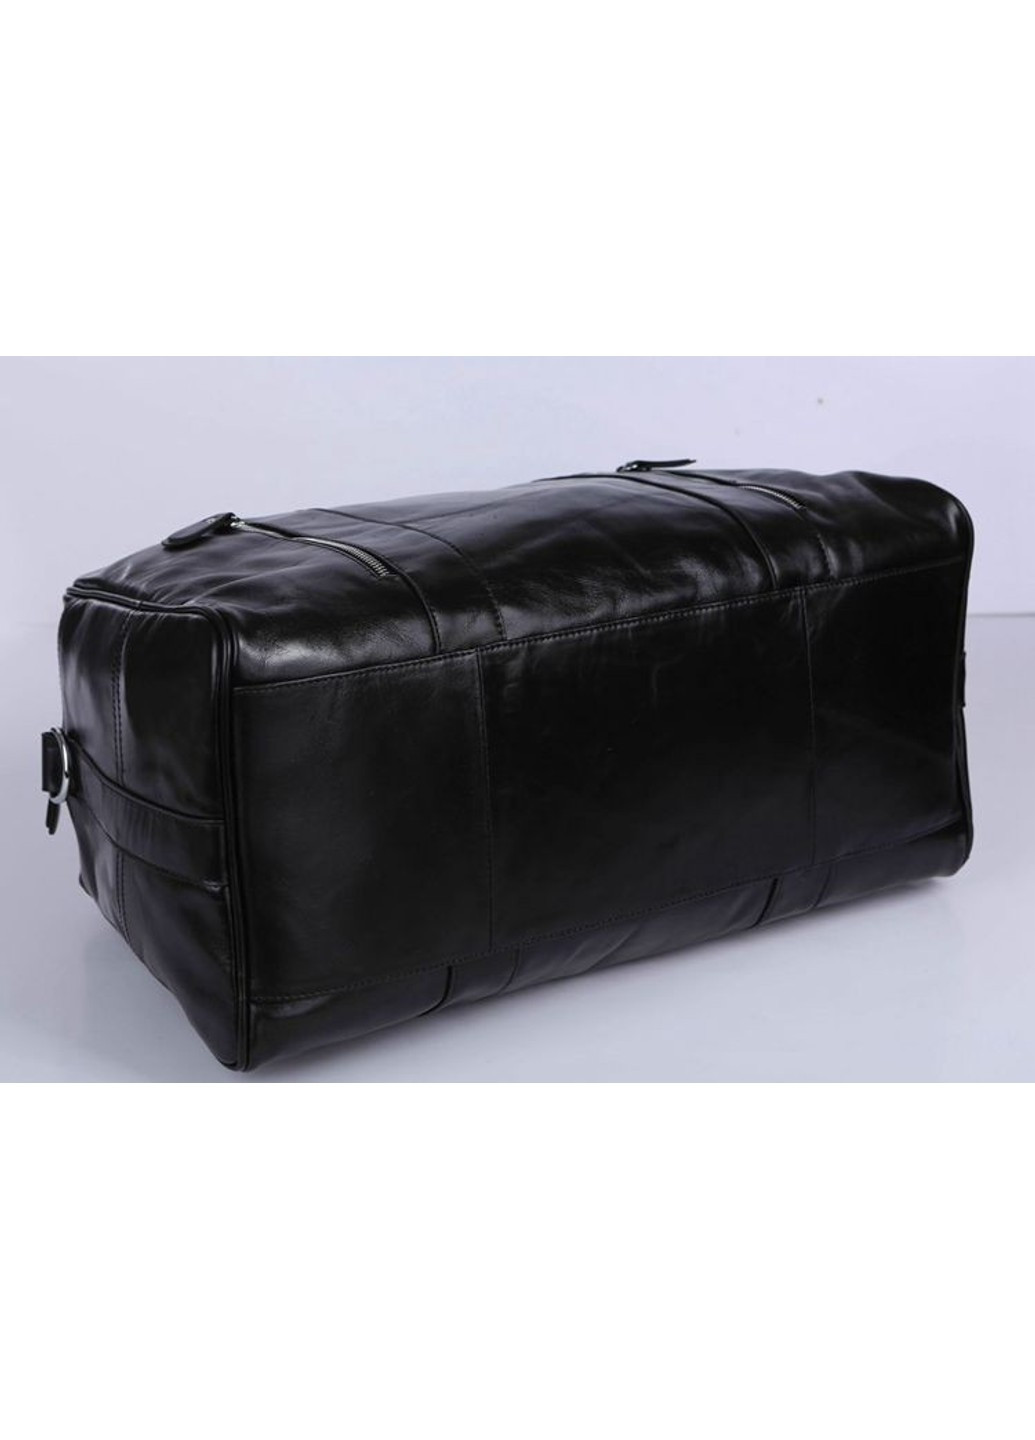 Мужская дорожная сумка 14135 кожаная Черная Vintage (271813525)